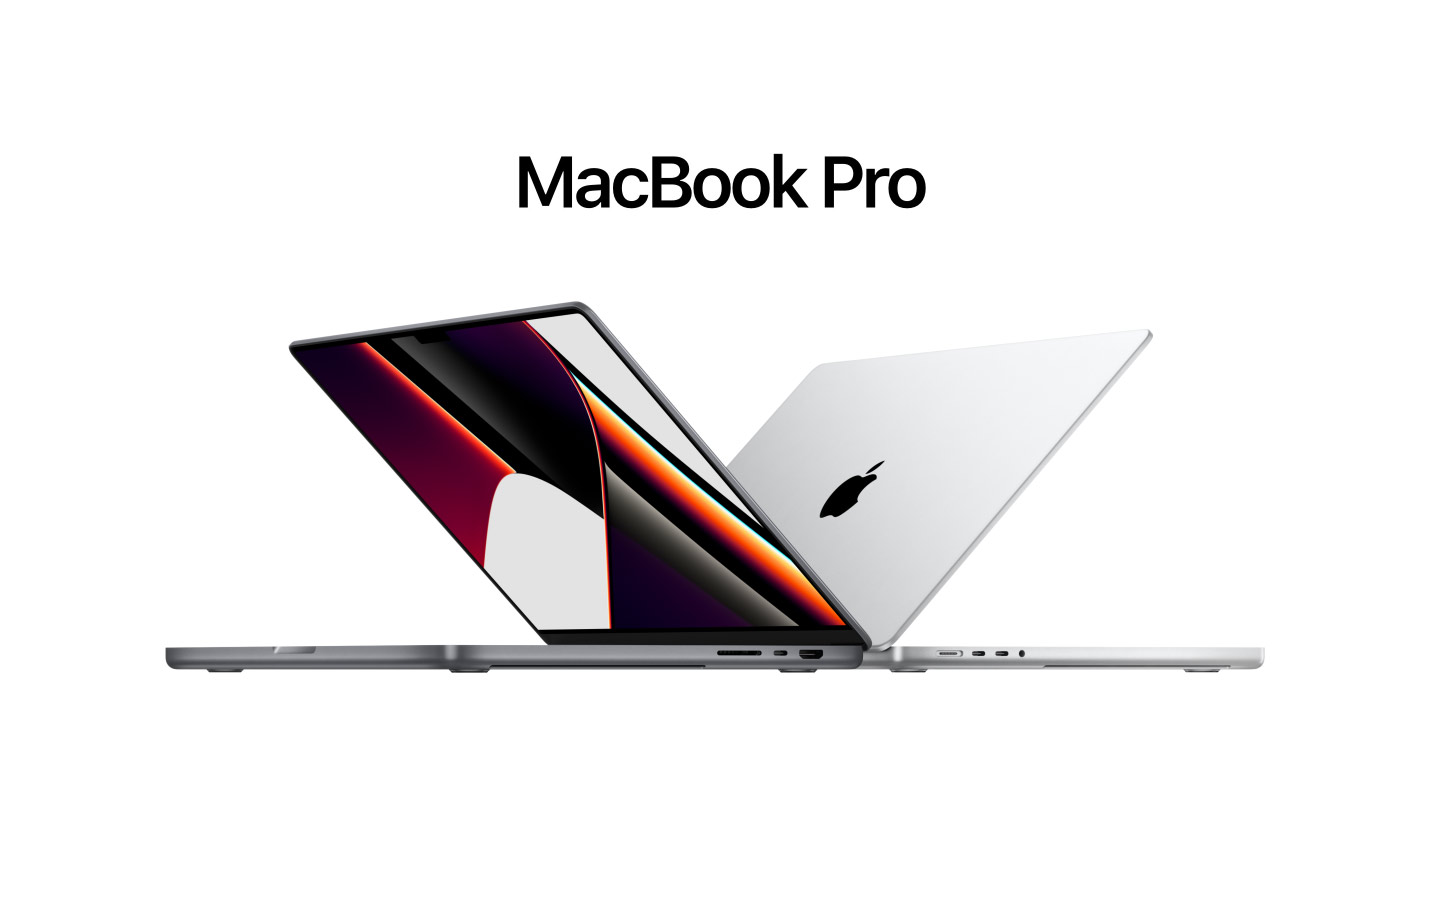 apple laptop 2016 price